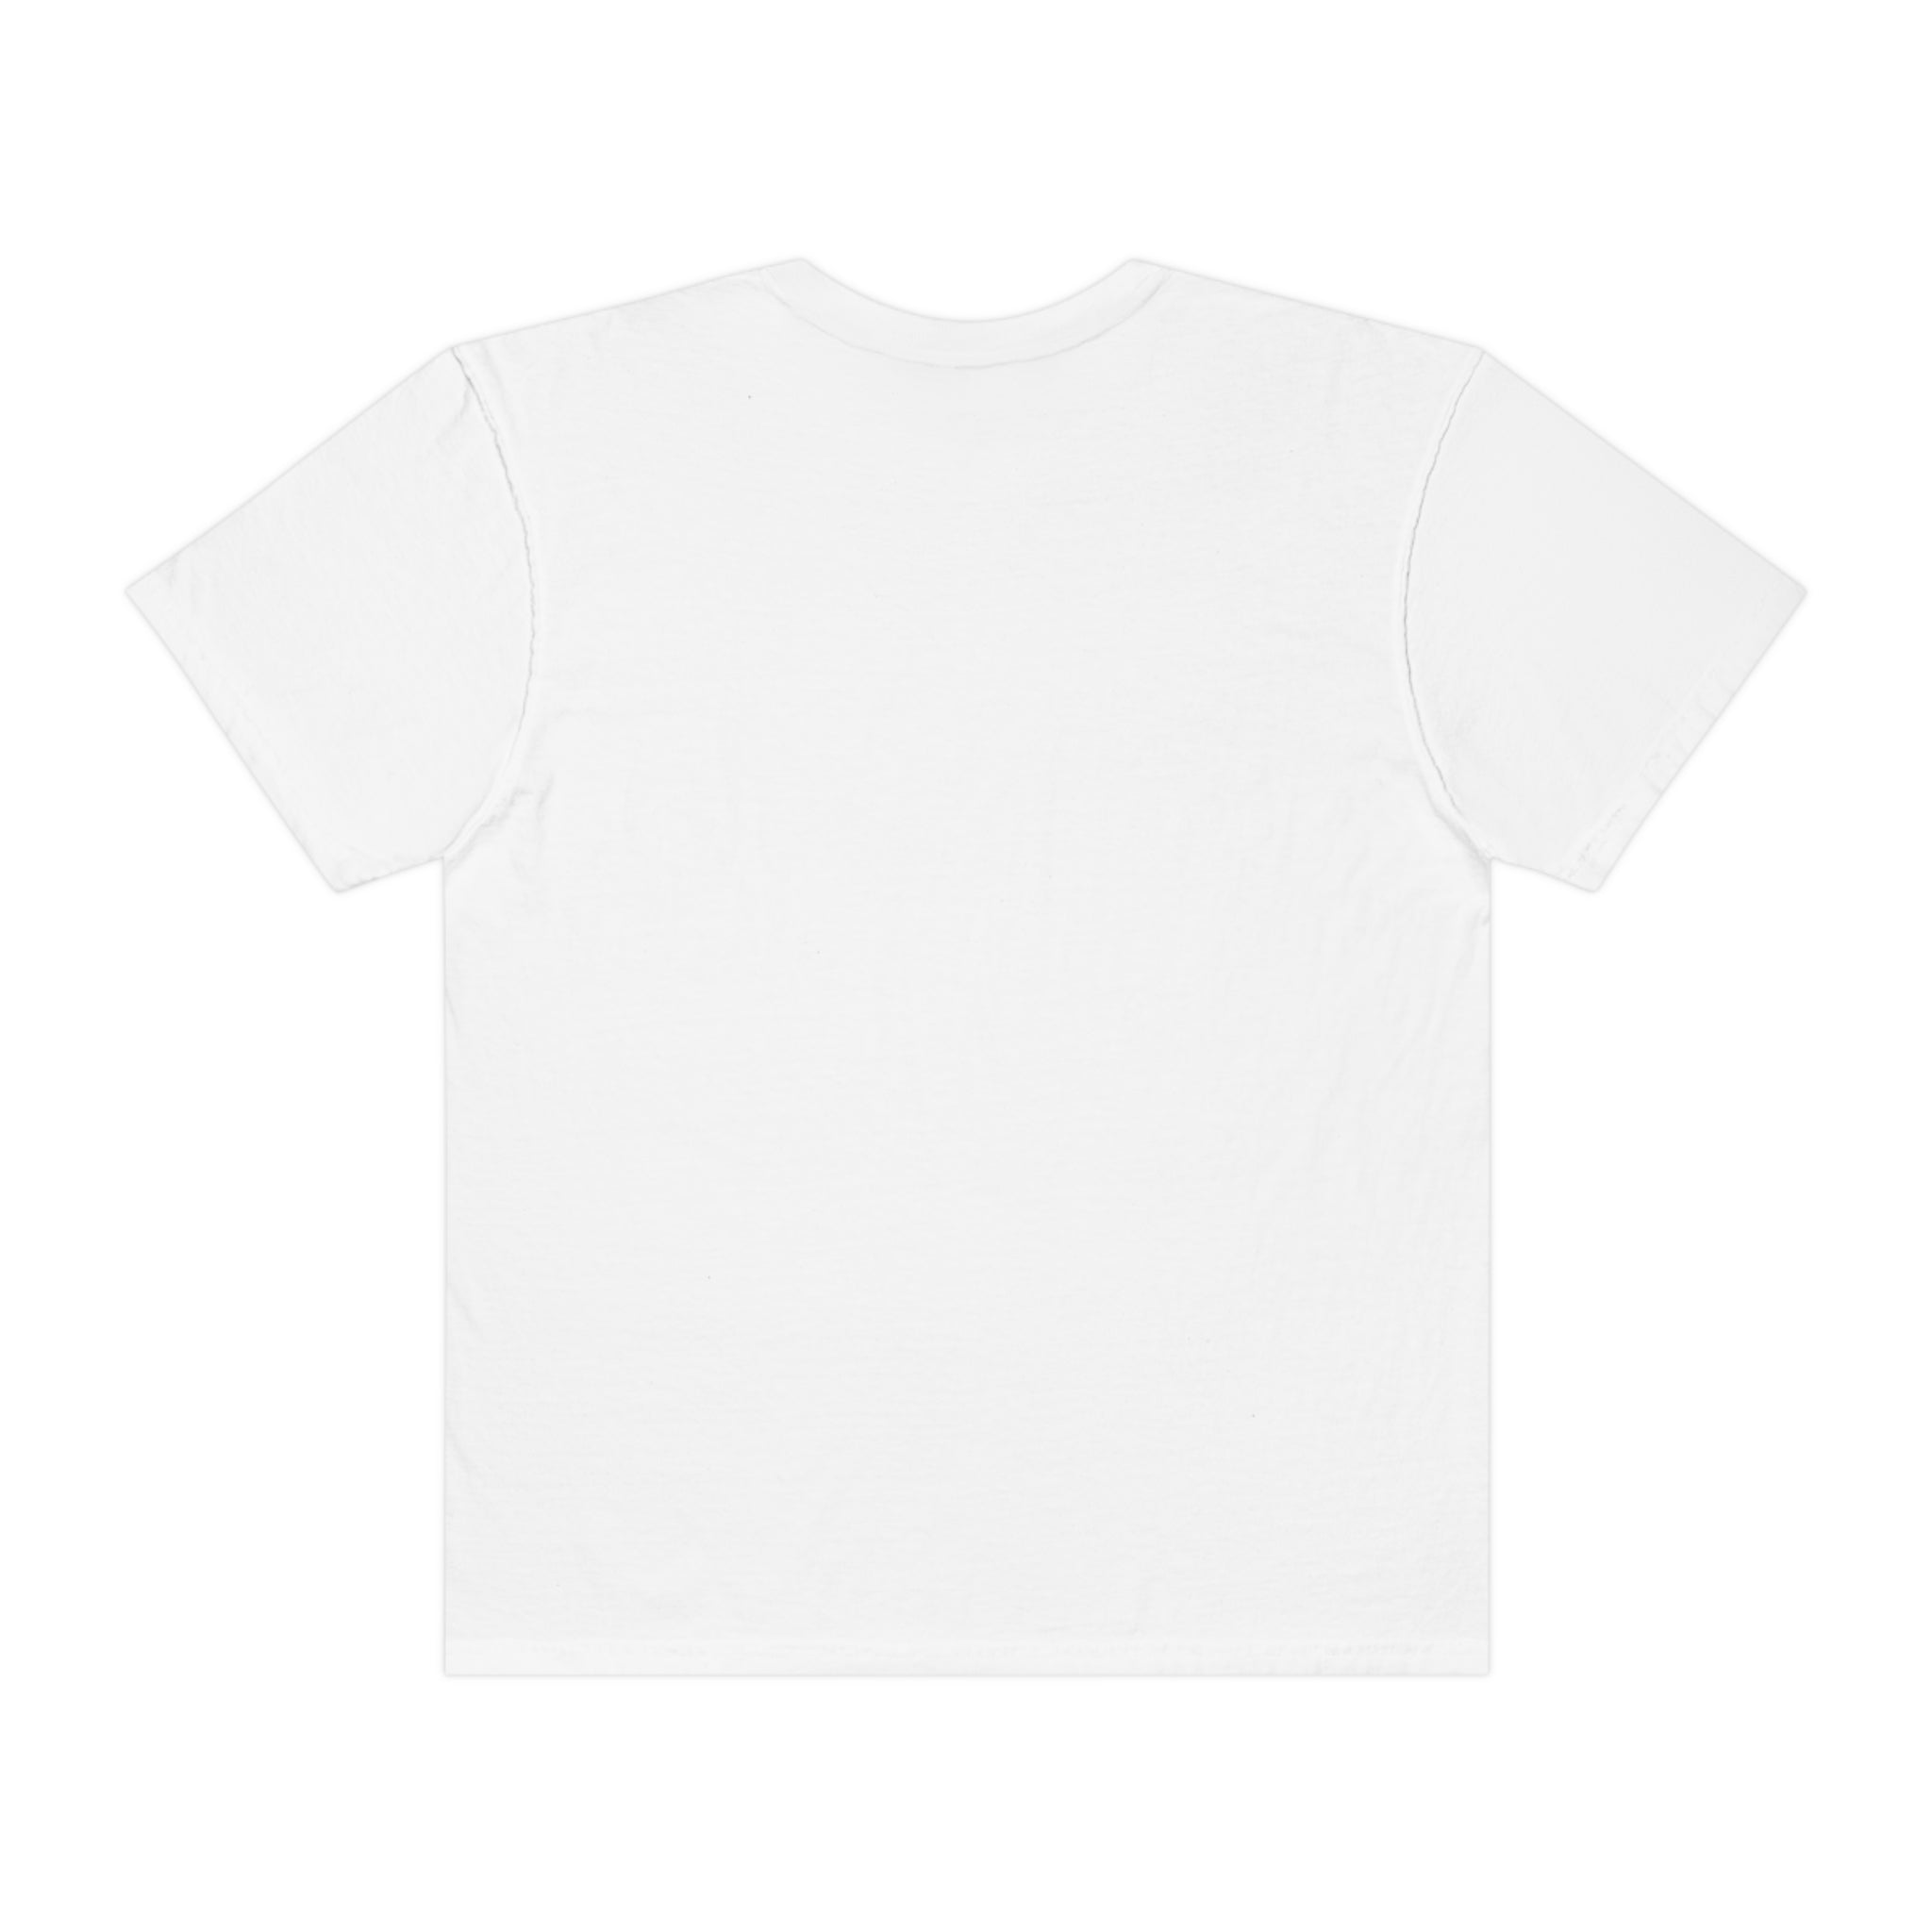 Unisex Third Eye Thoughts T-Shirt